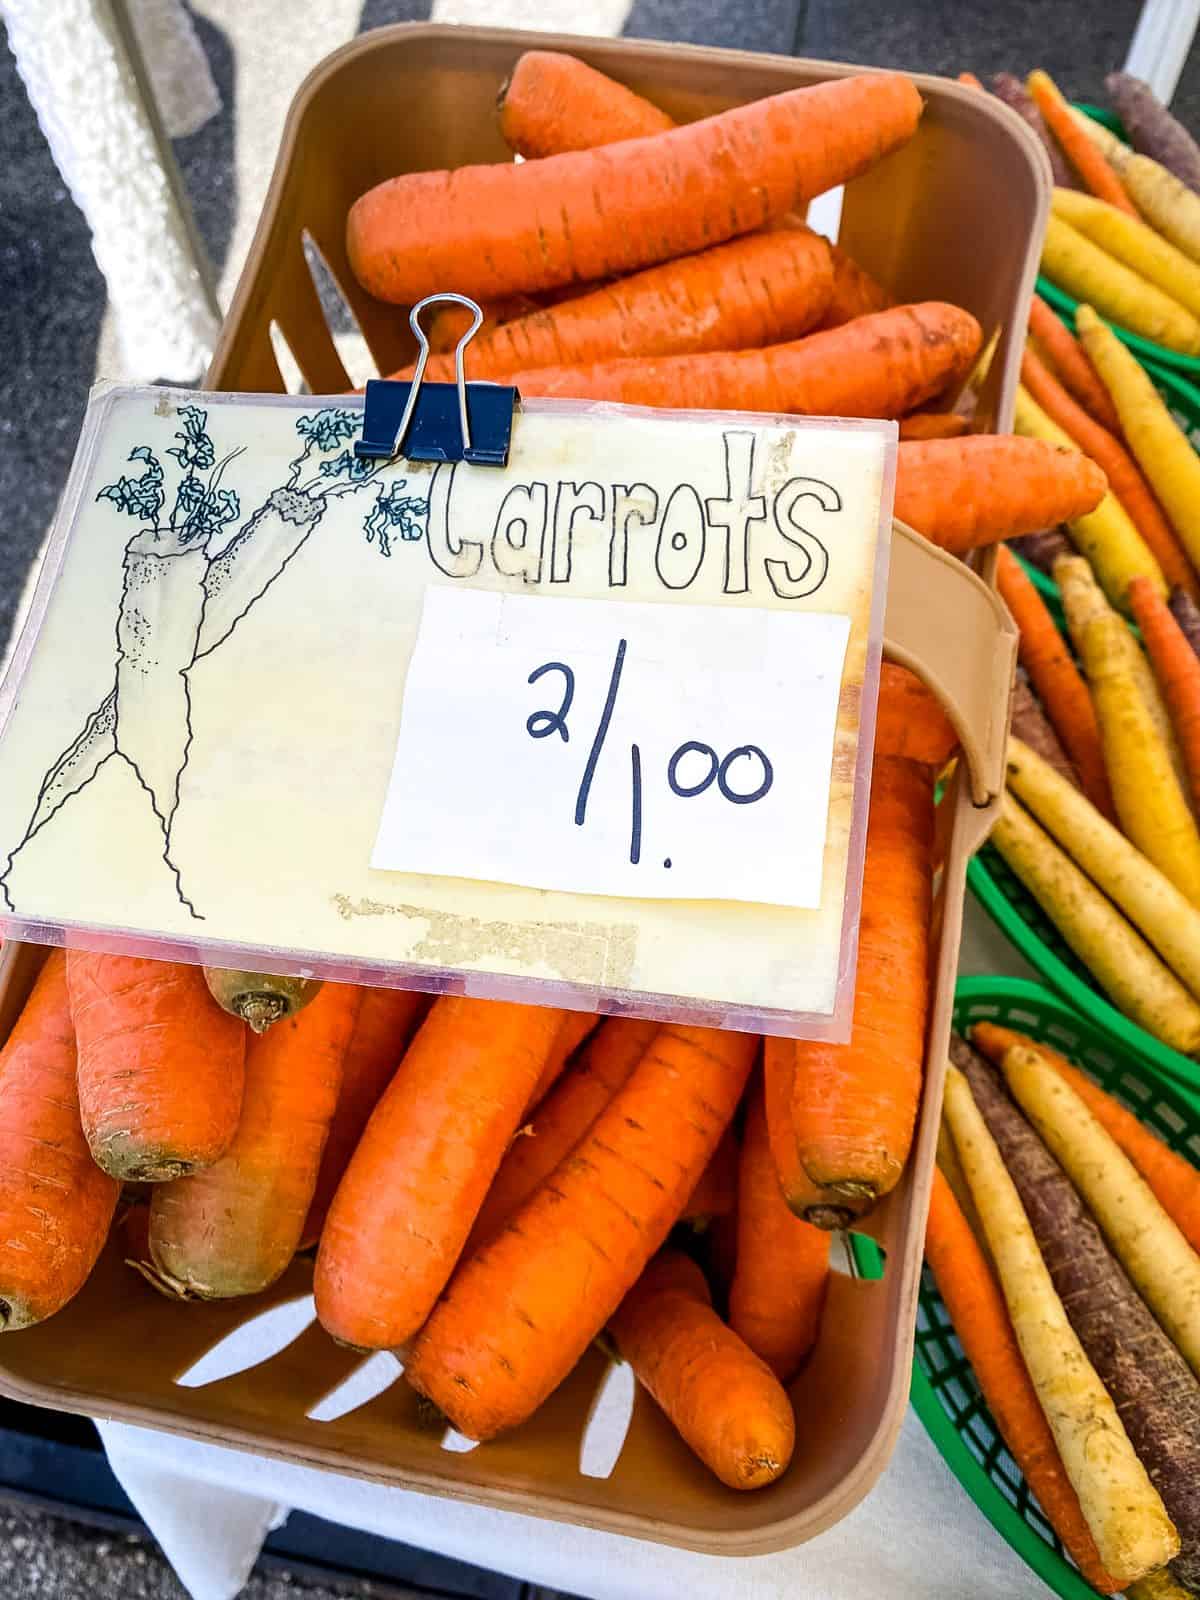 Bin of carrots at farmers market.